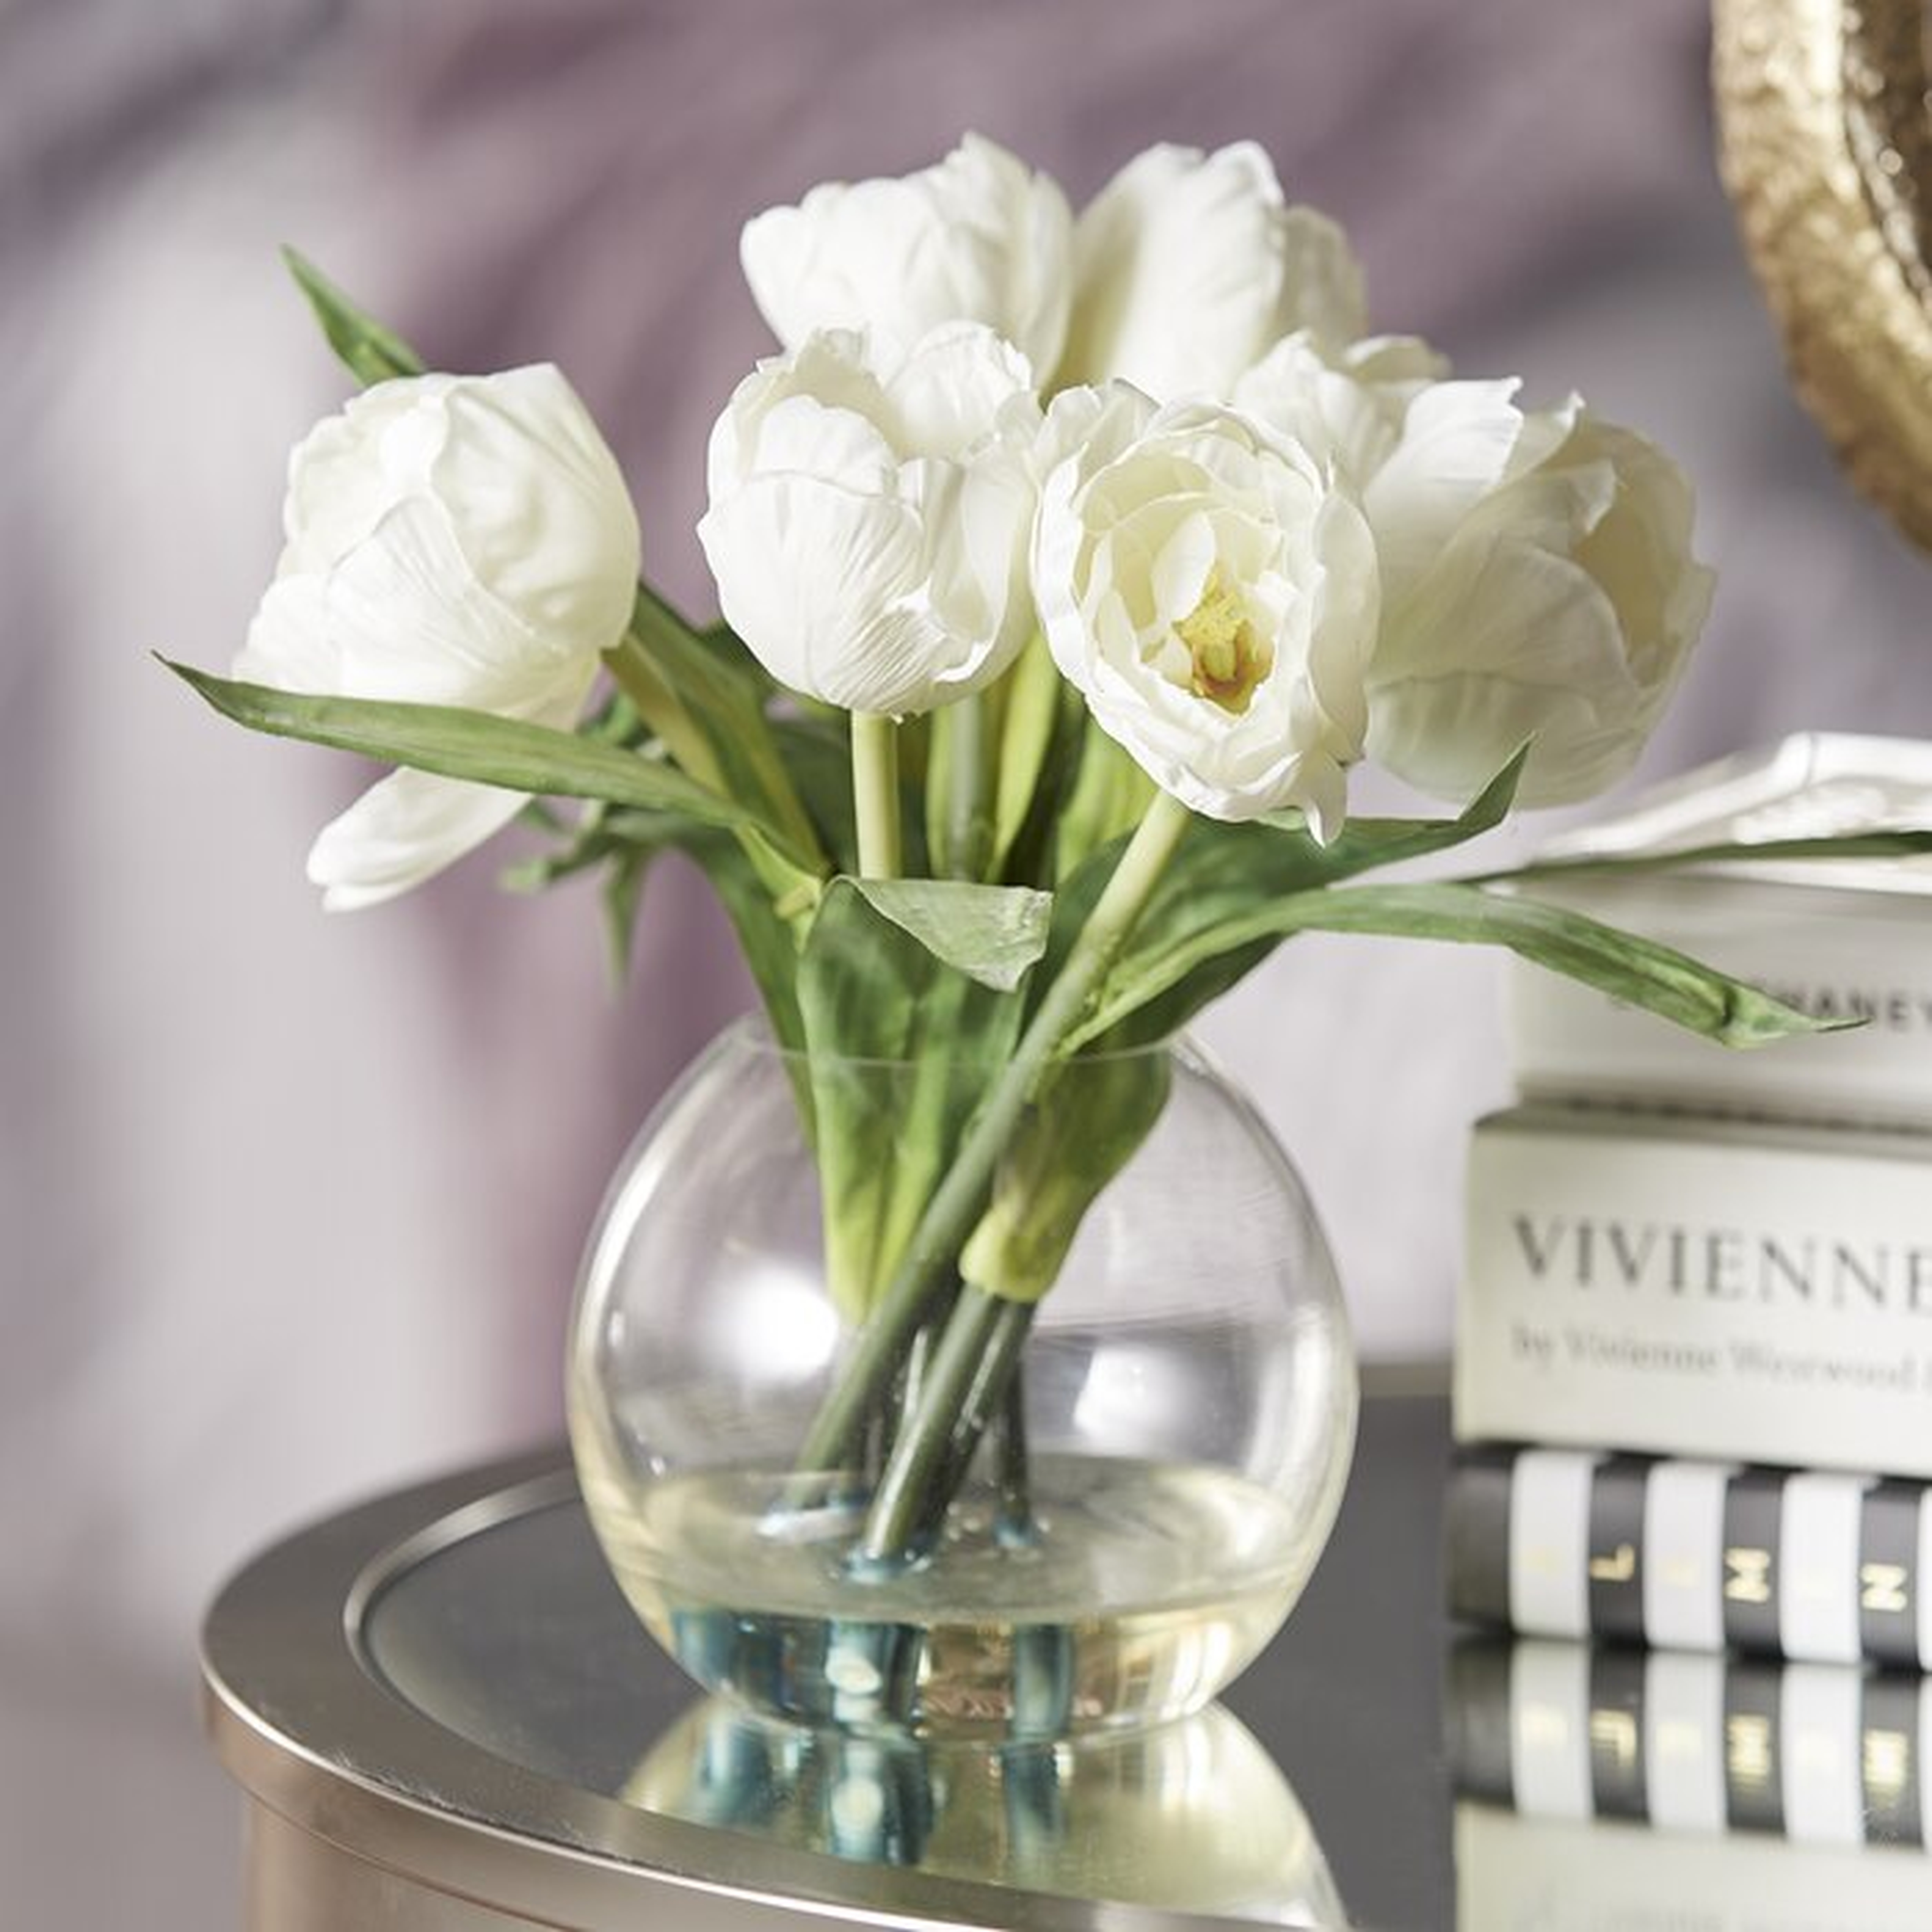 Tulips Floral Arrangement with Vase - Birch Lane